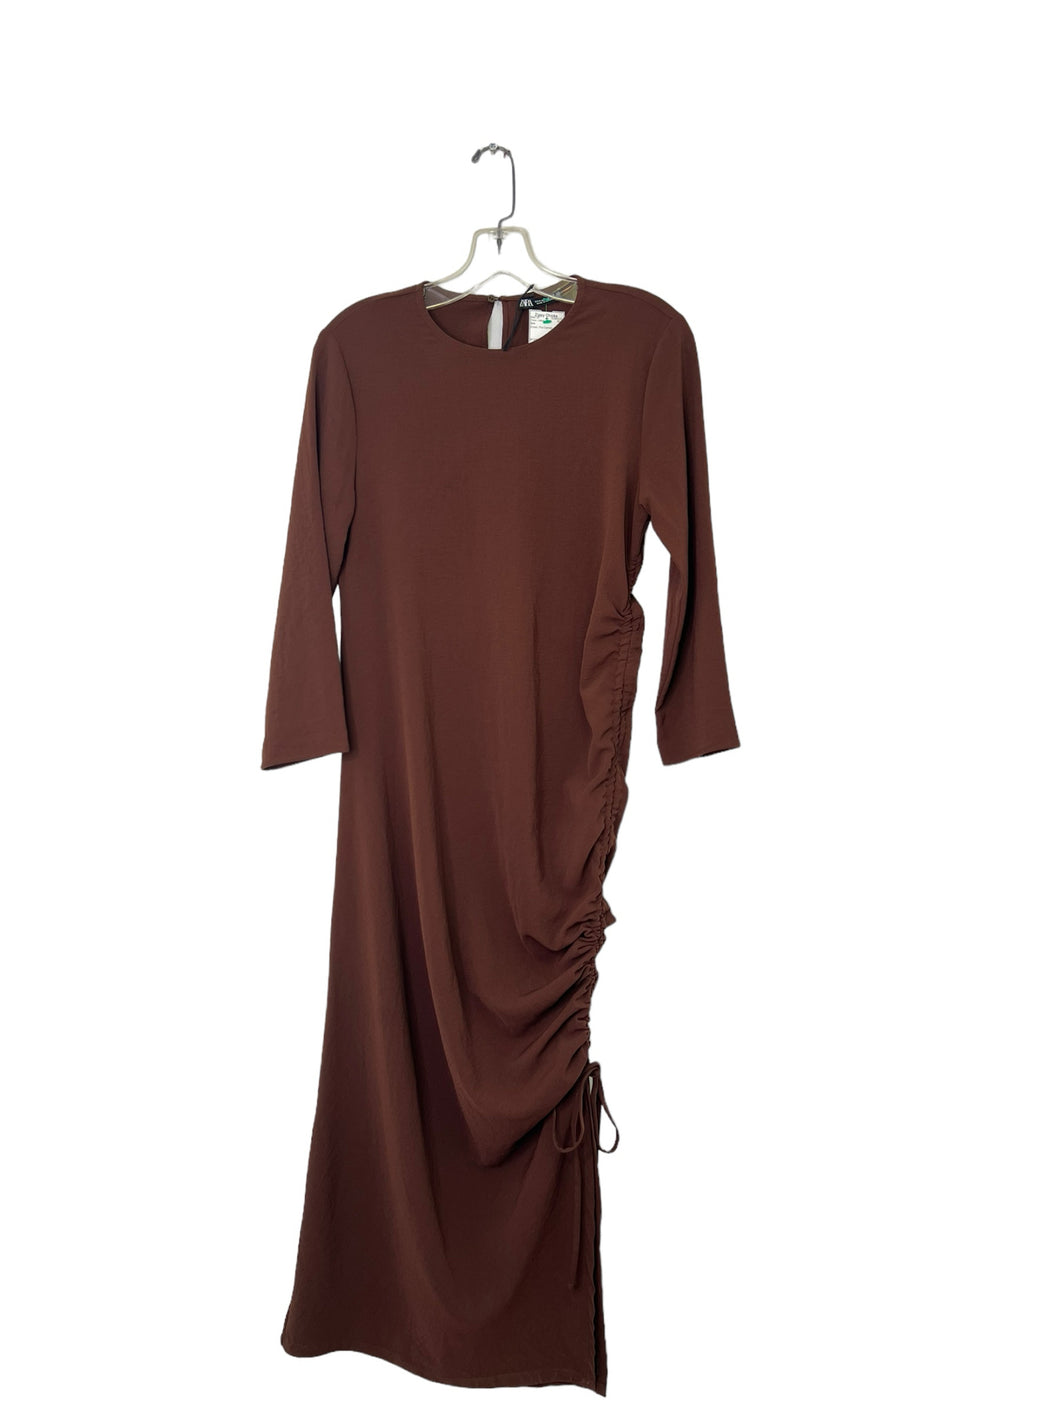 Zara Size Small Brown Dress- Ladies